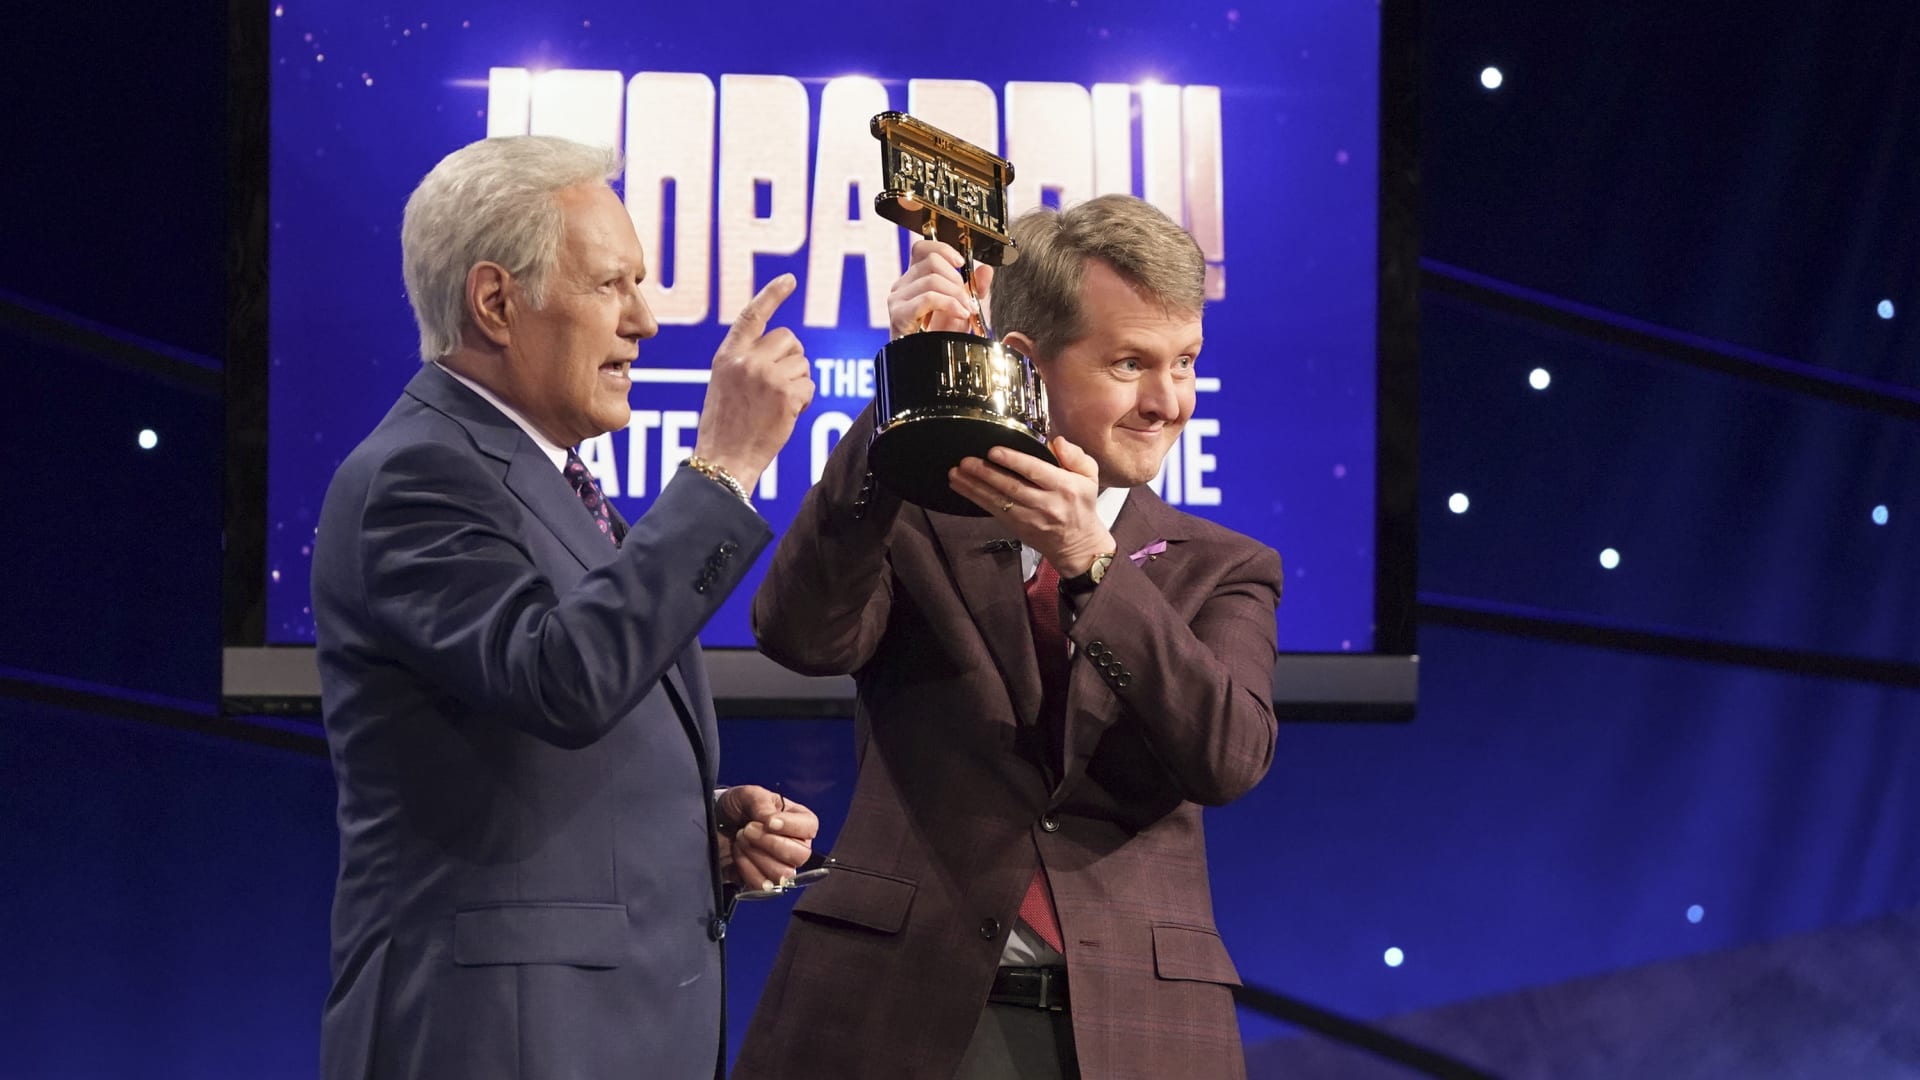 Alex Trebek and Ken Jennings on the set of "Jeopardy!"